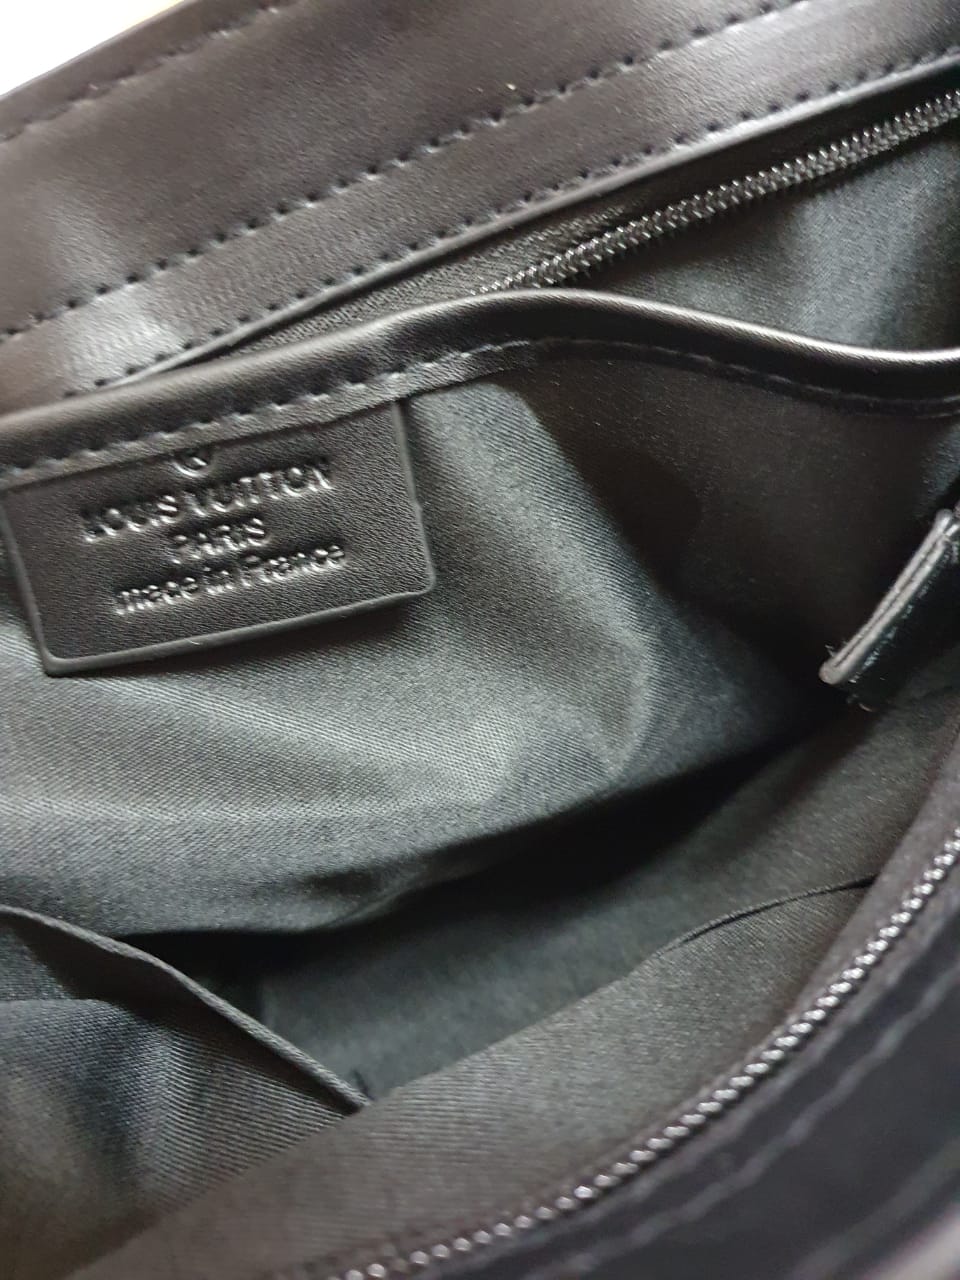 Louis Vuitton cross body bag